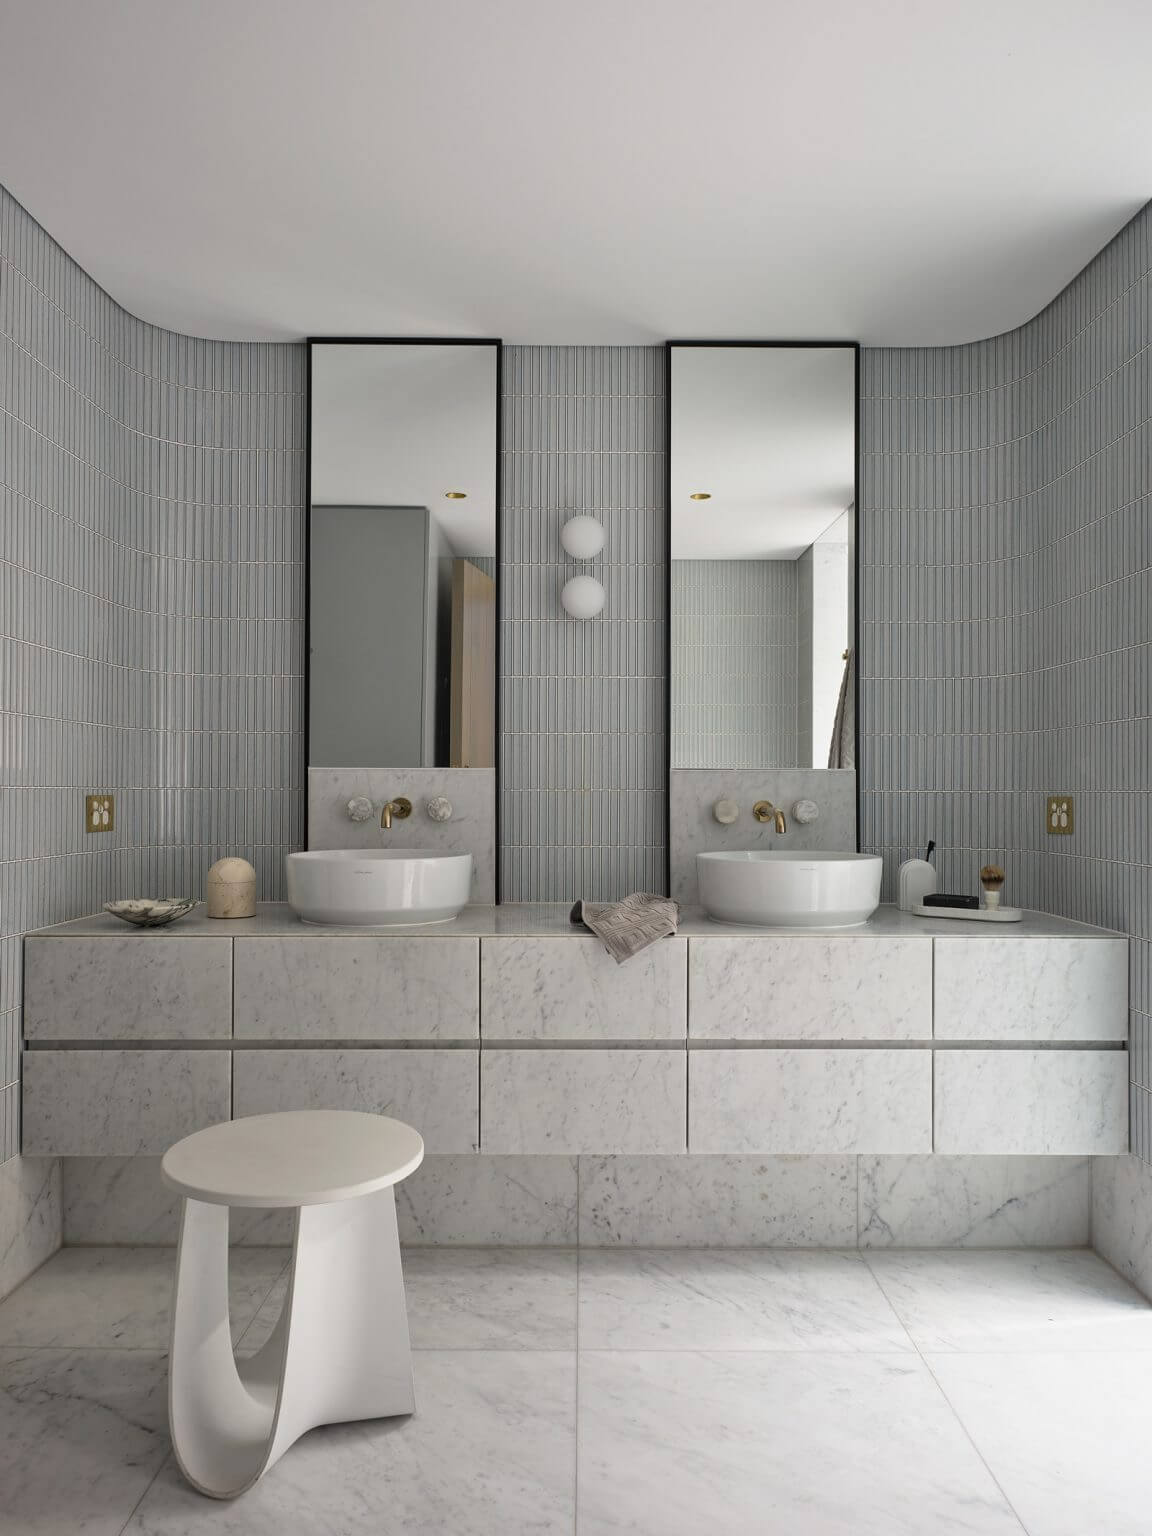 contemporary bathroom design